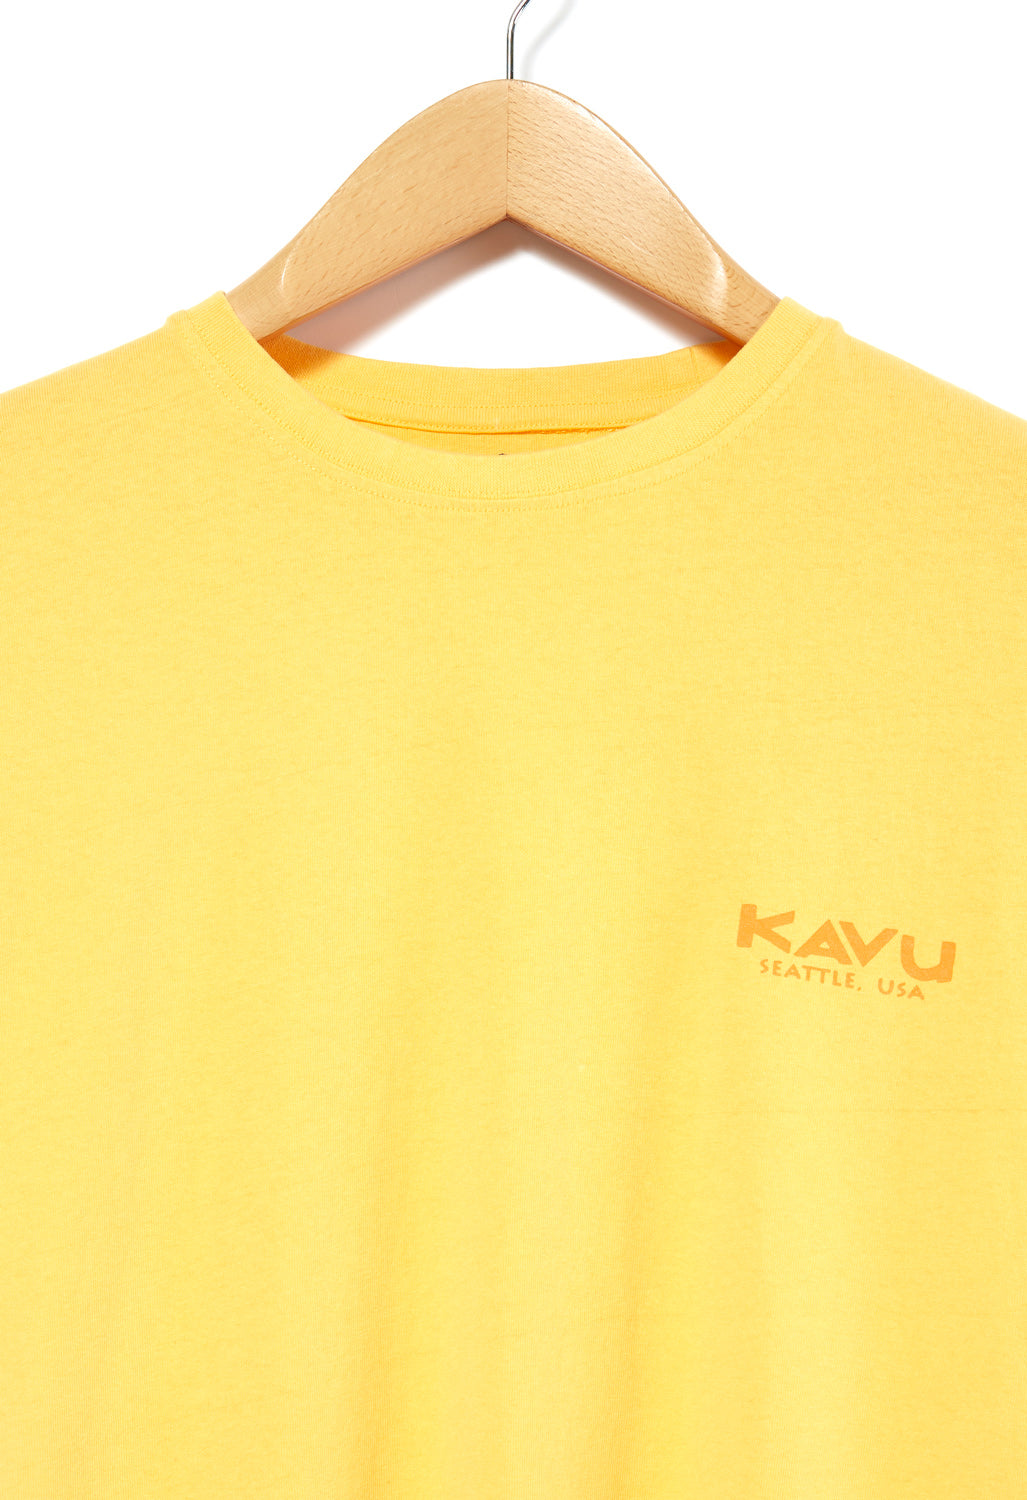 KAVU Busy Men's T-Shirt - Sunray